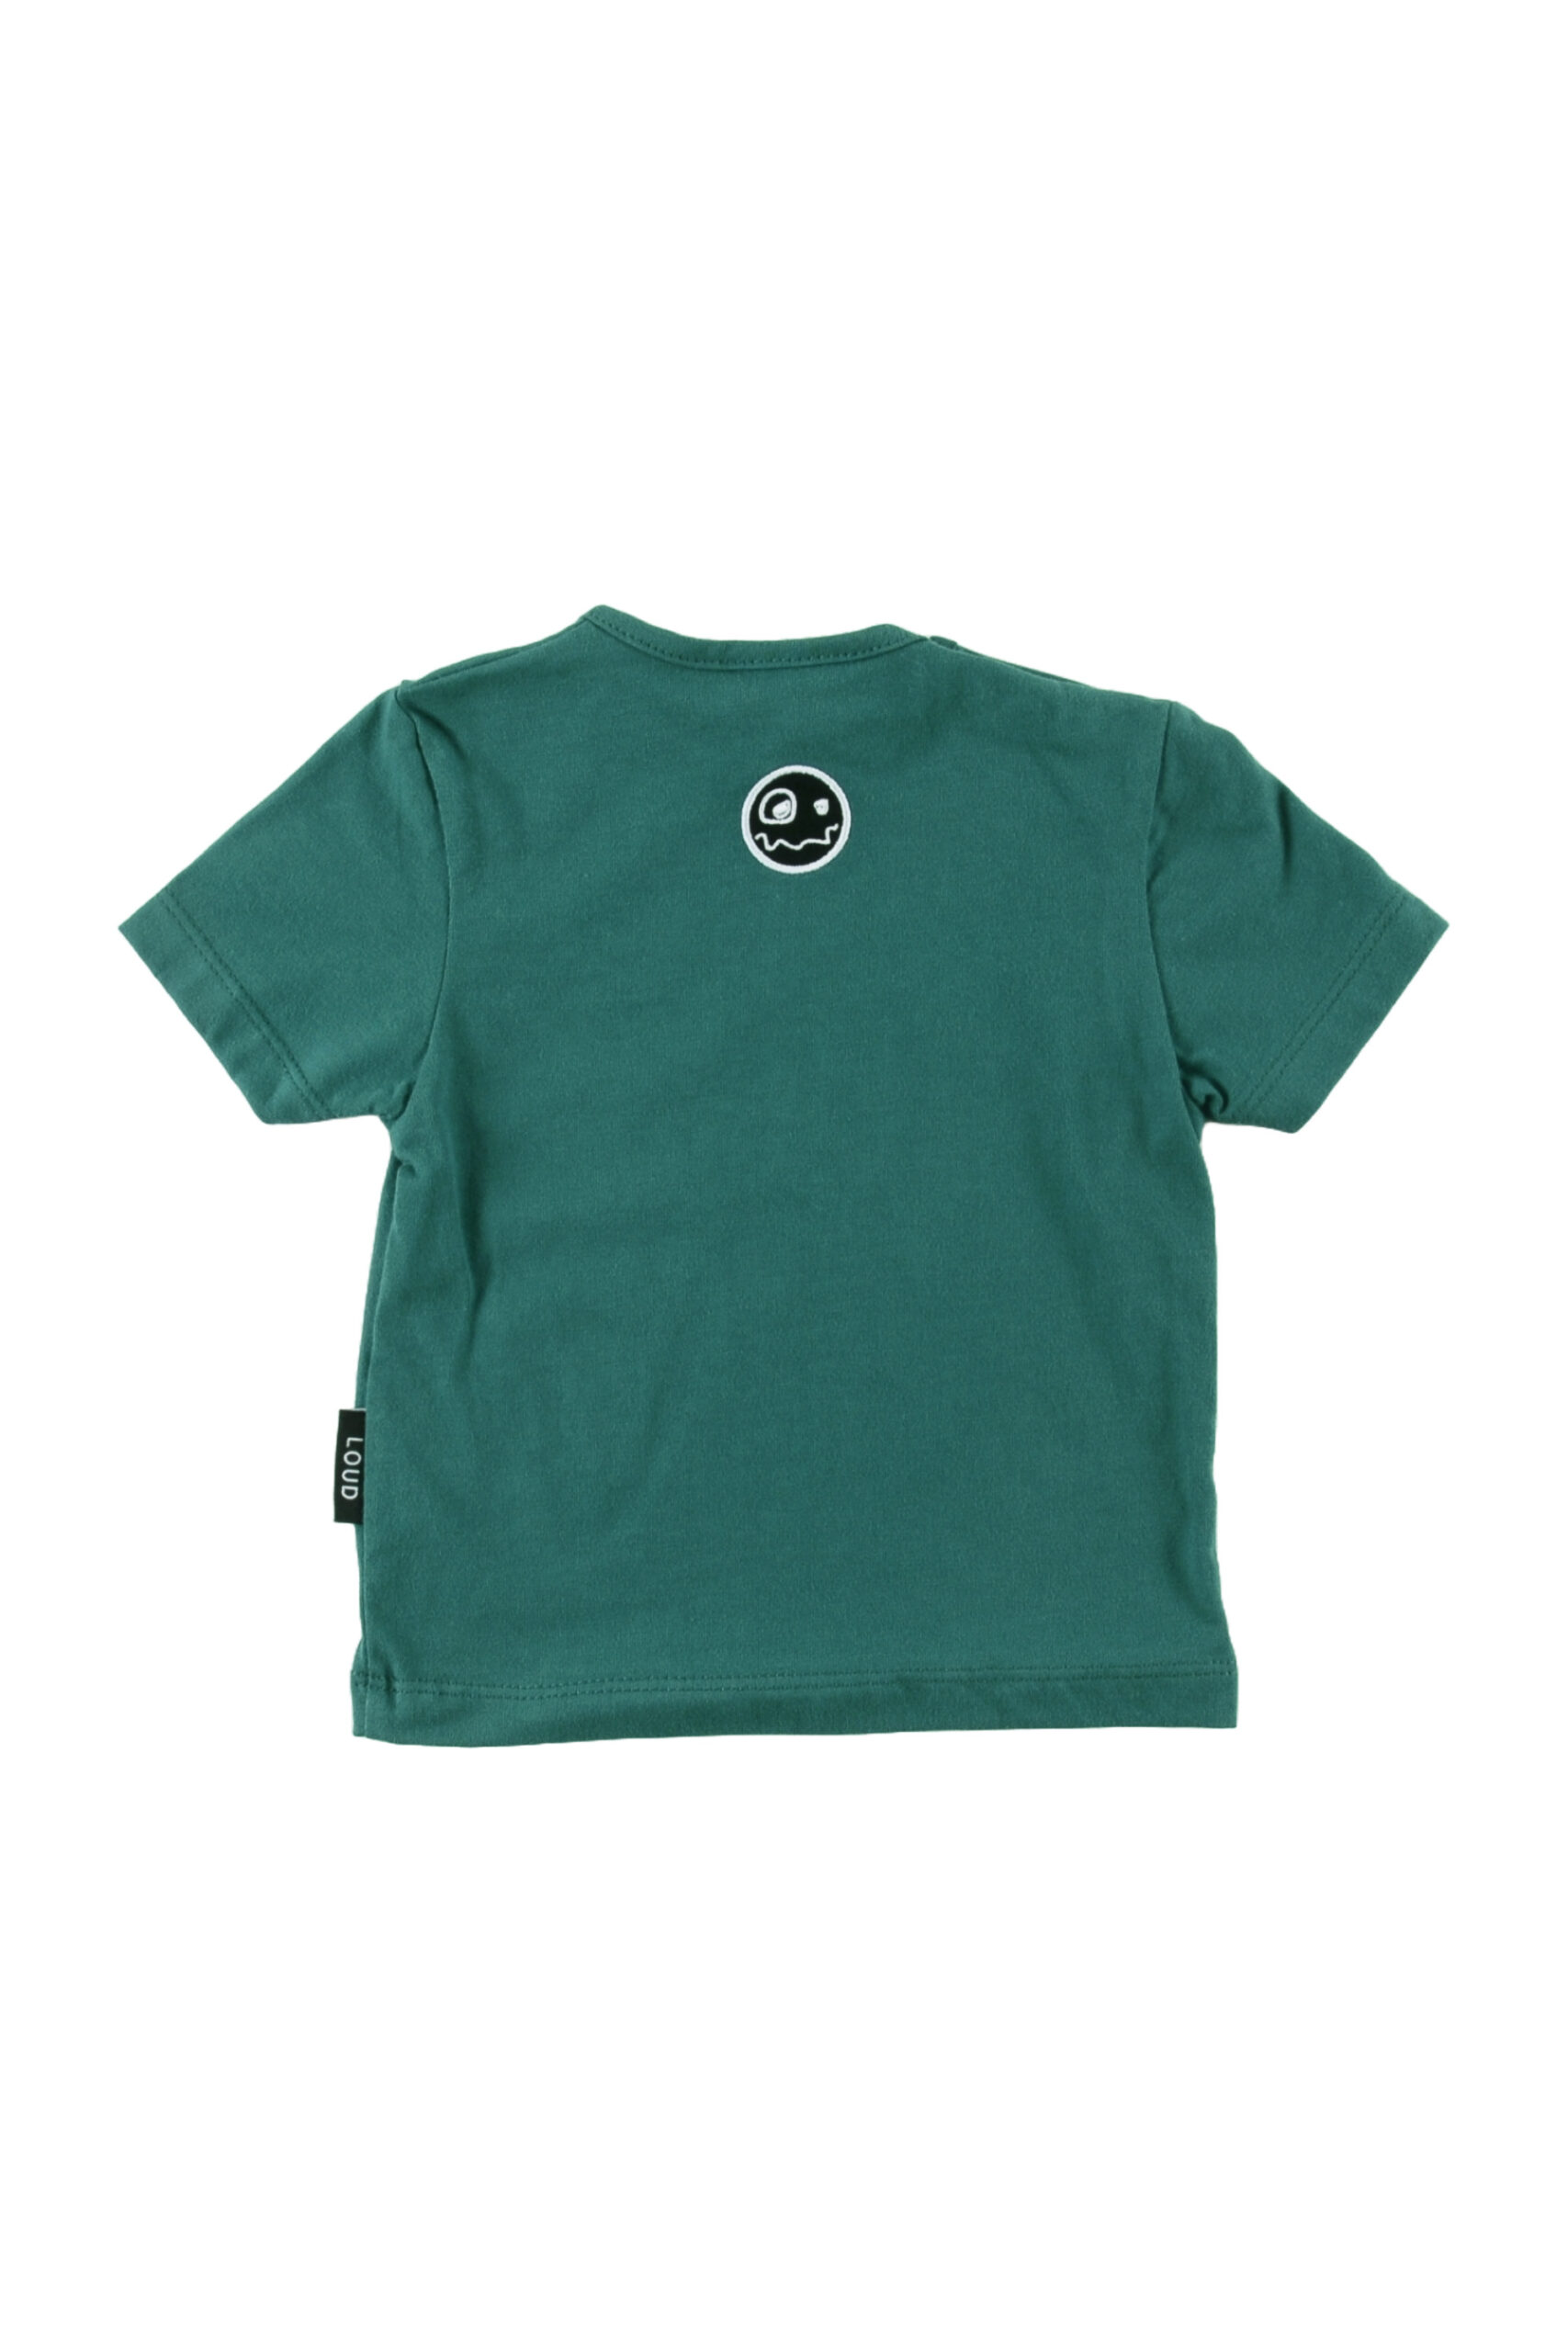 PU’UAWI – Storm / Jade Print T-Shirt Regular Fit - Loud Apparel